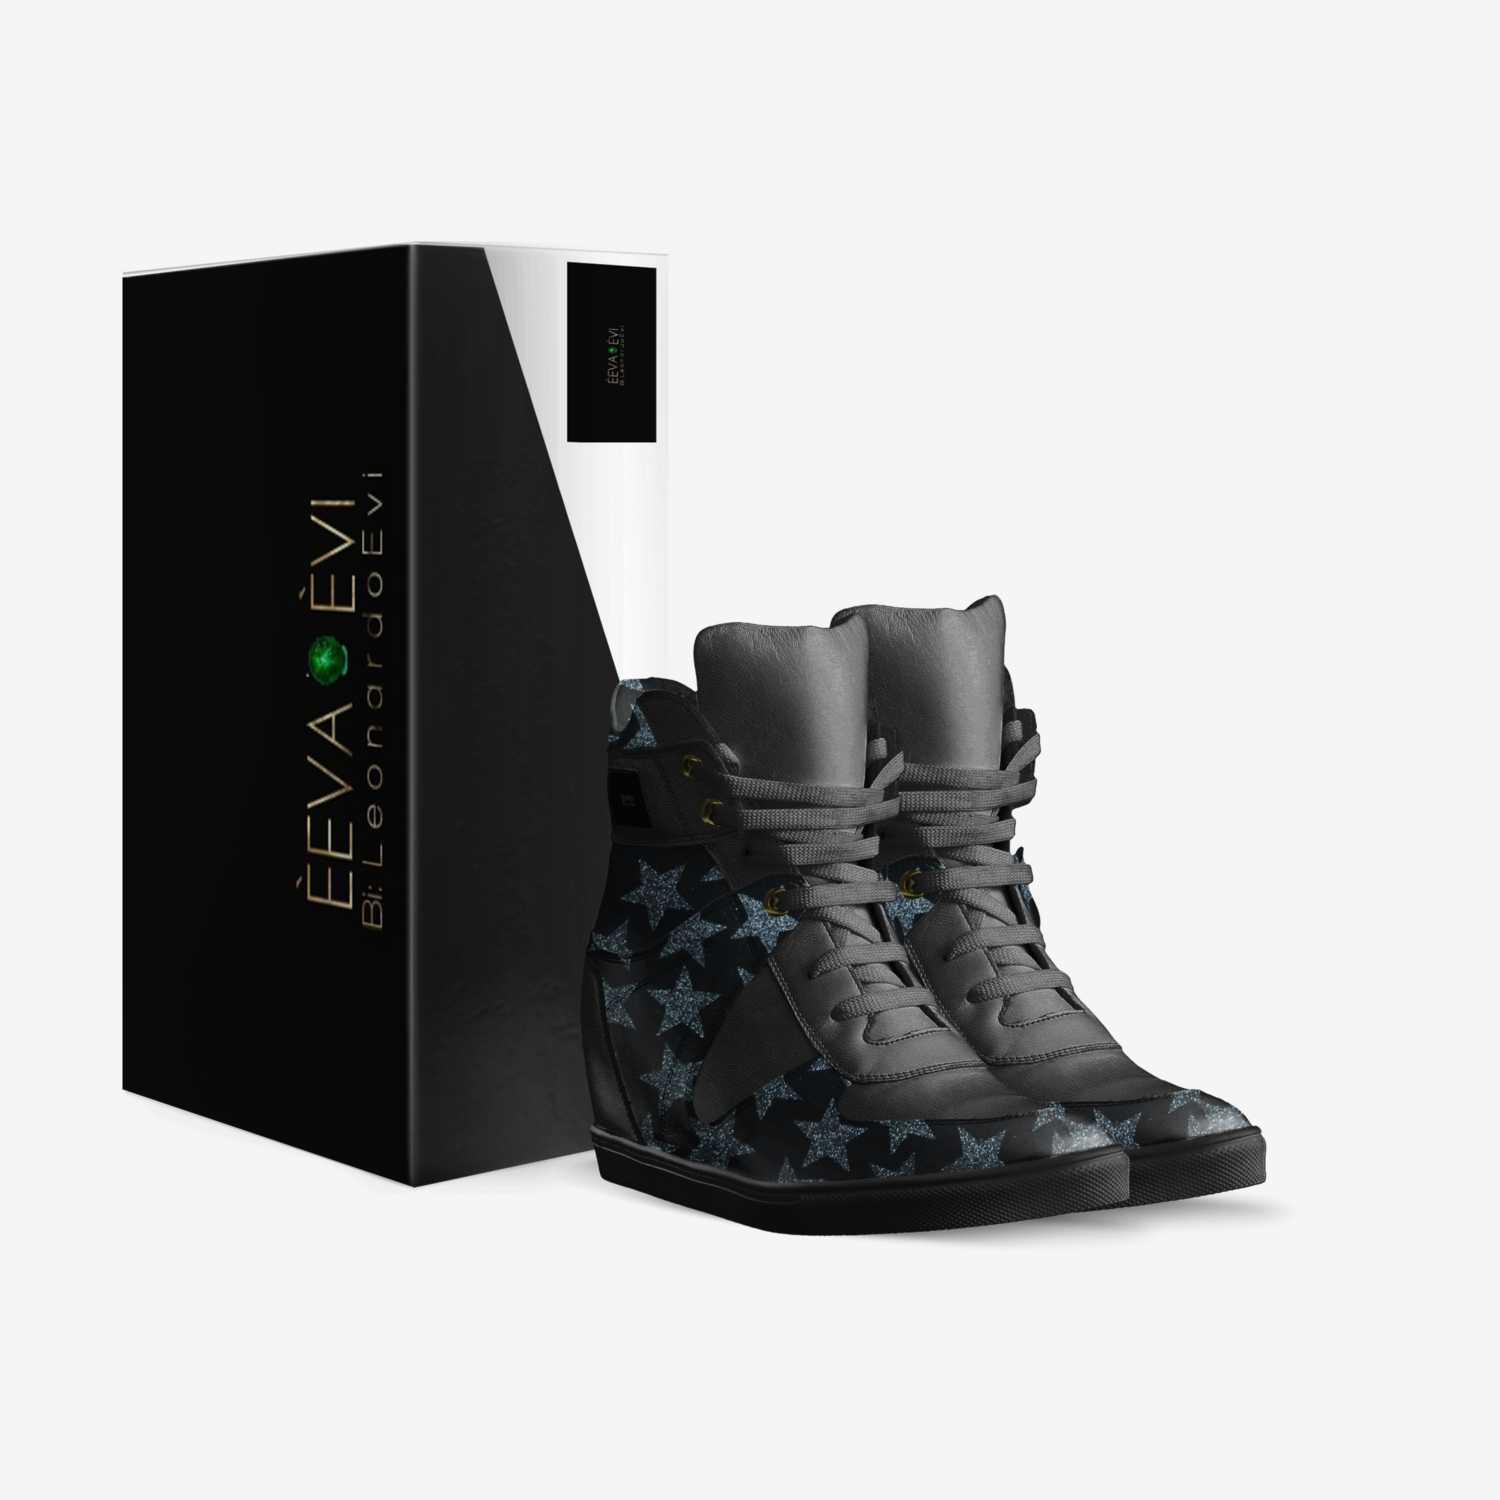 ÈEVA ÈVI custom made in Italy shoes by Evi Mack | Box view